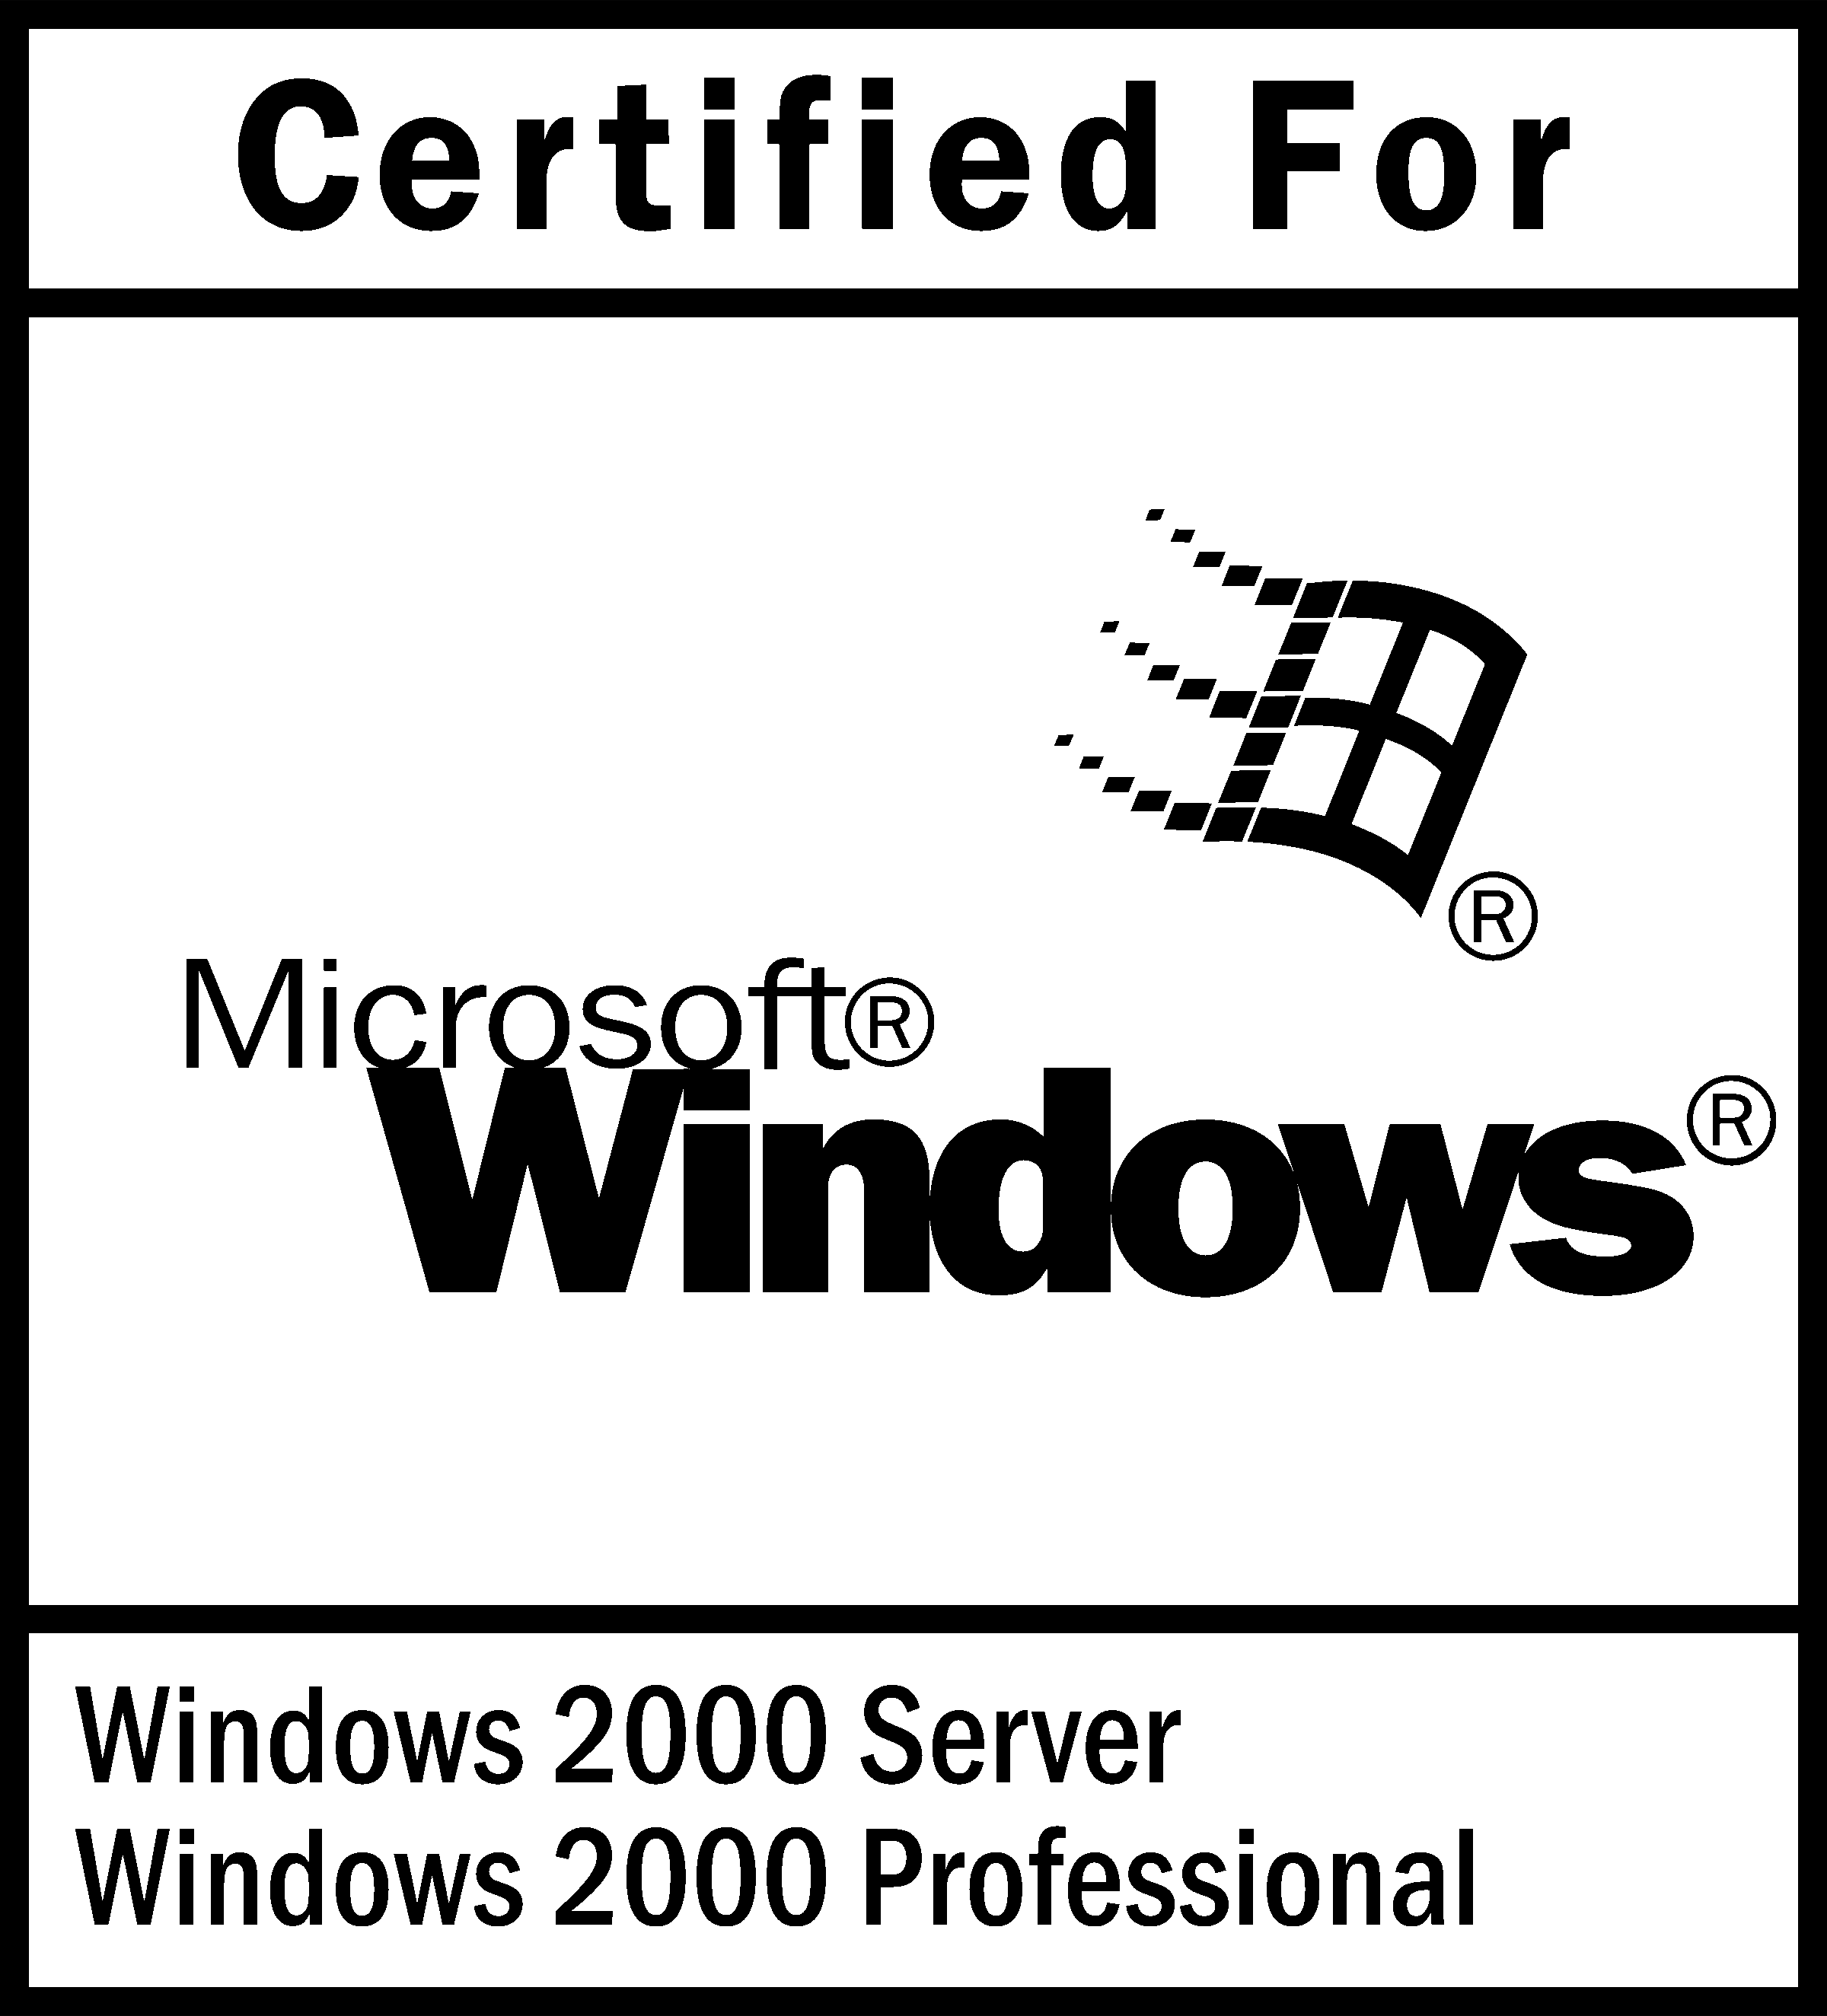 Windows 2000 Logo - Microsoft Windows 2000 Logo PNG Transparent & SVG Vector - Freebie ...